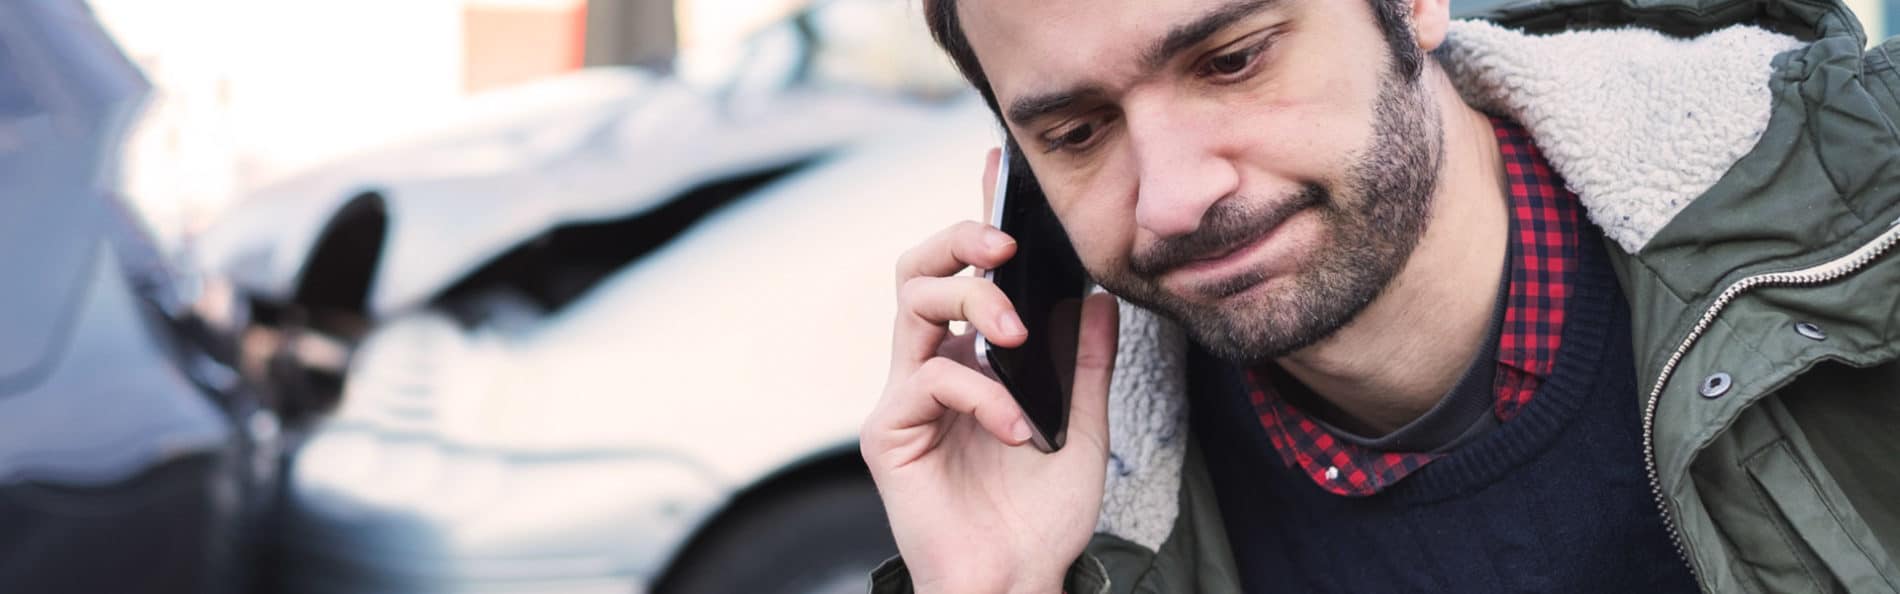 Man on cellphone after a car crash